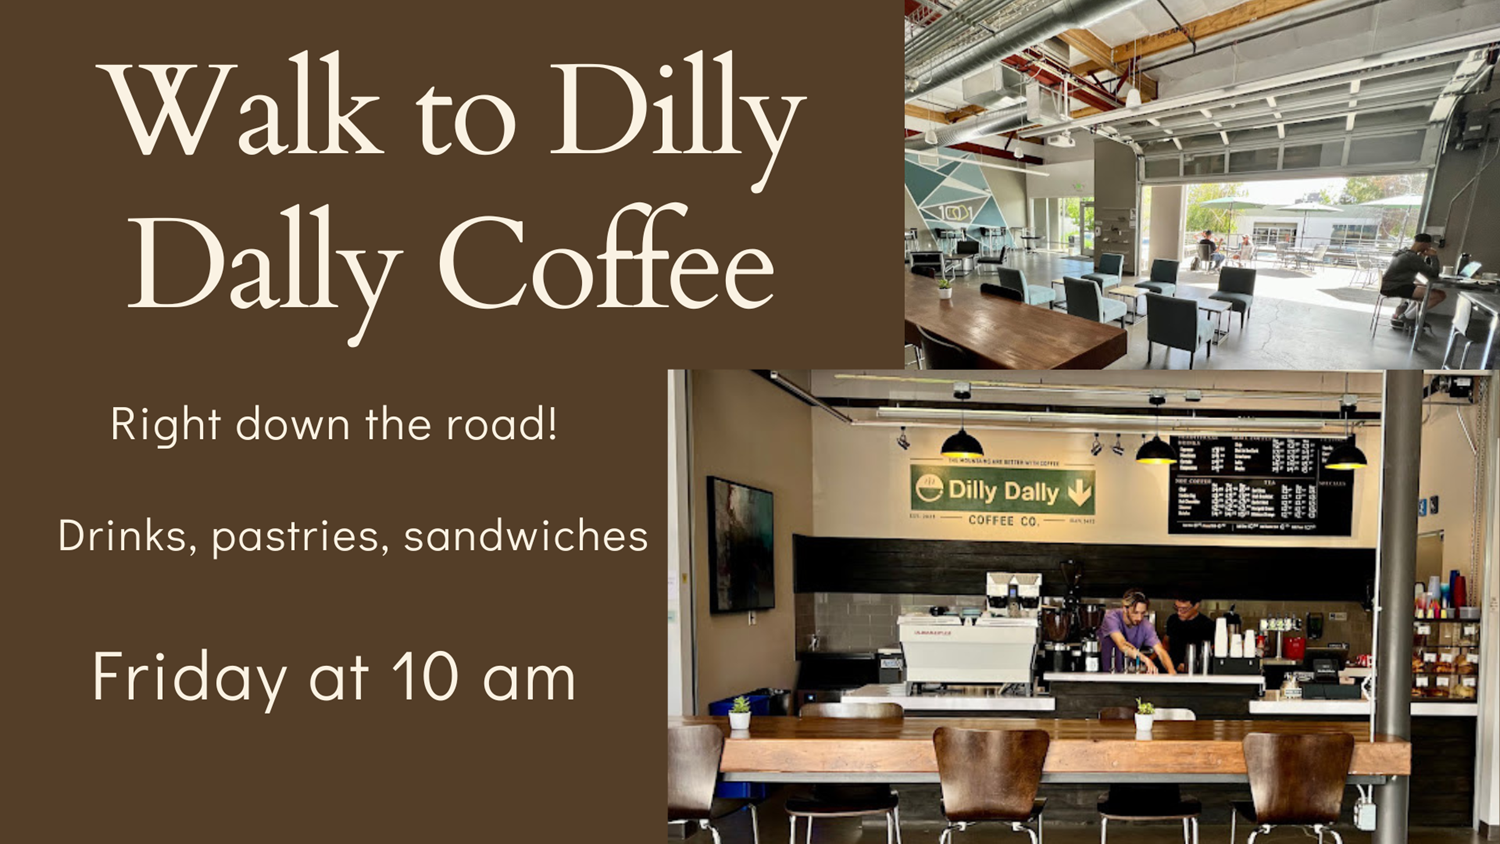 Walk to Dilly Dally Cafe